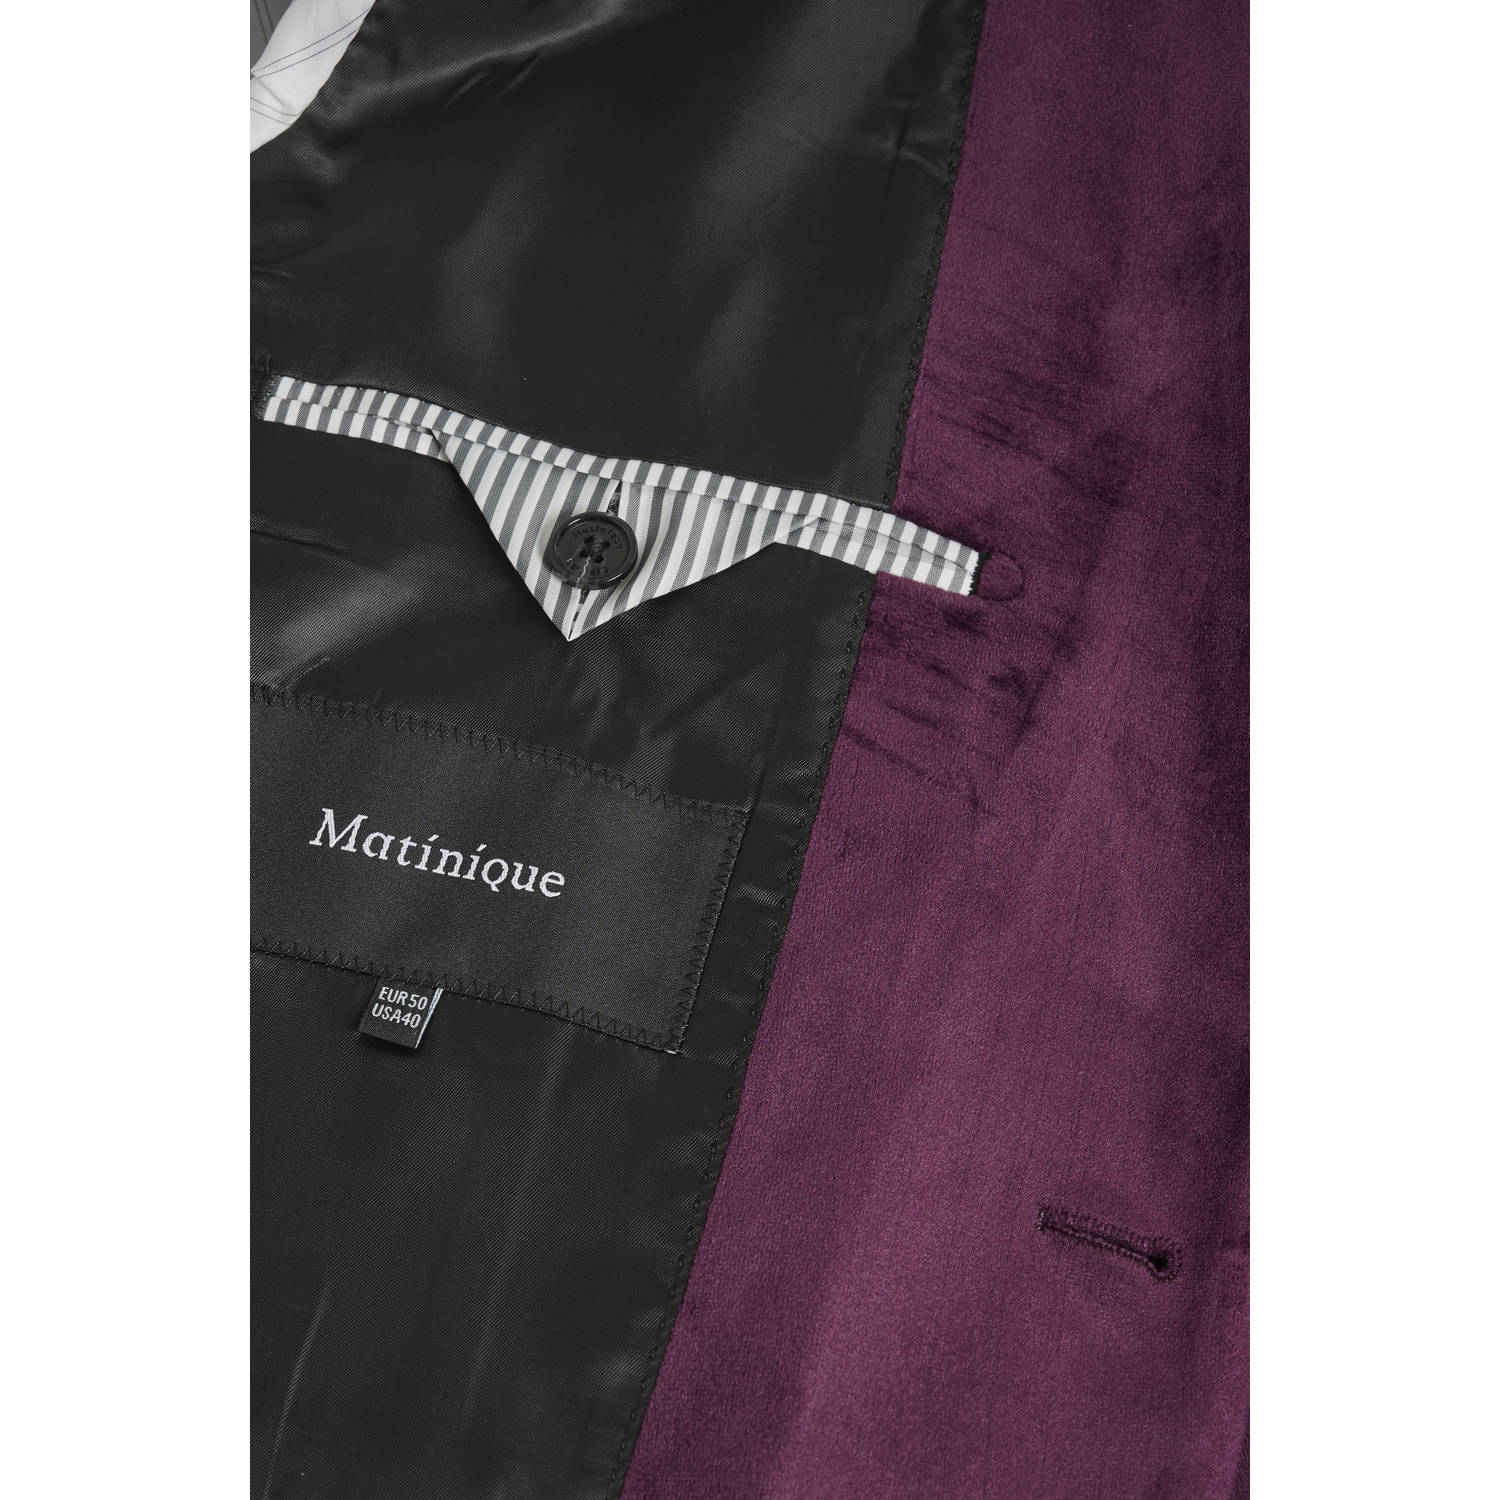 Matinique velours regular fit colbert MAgeorge F potent purple